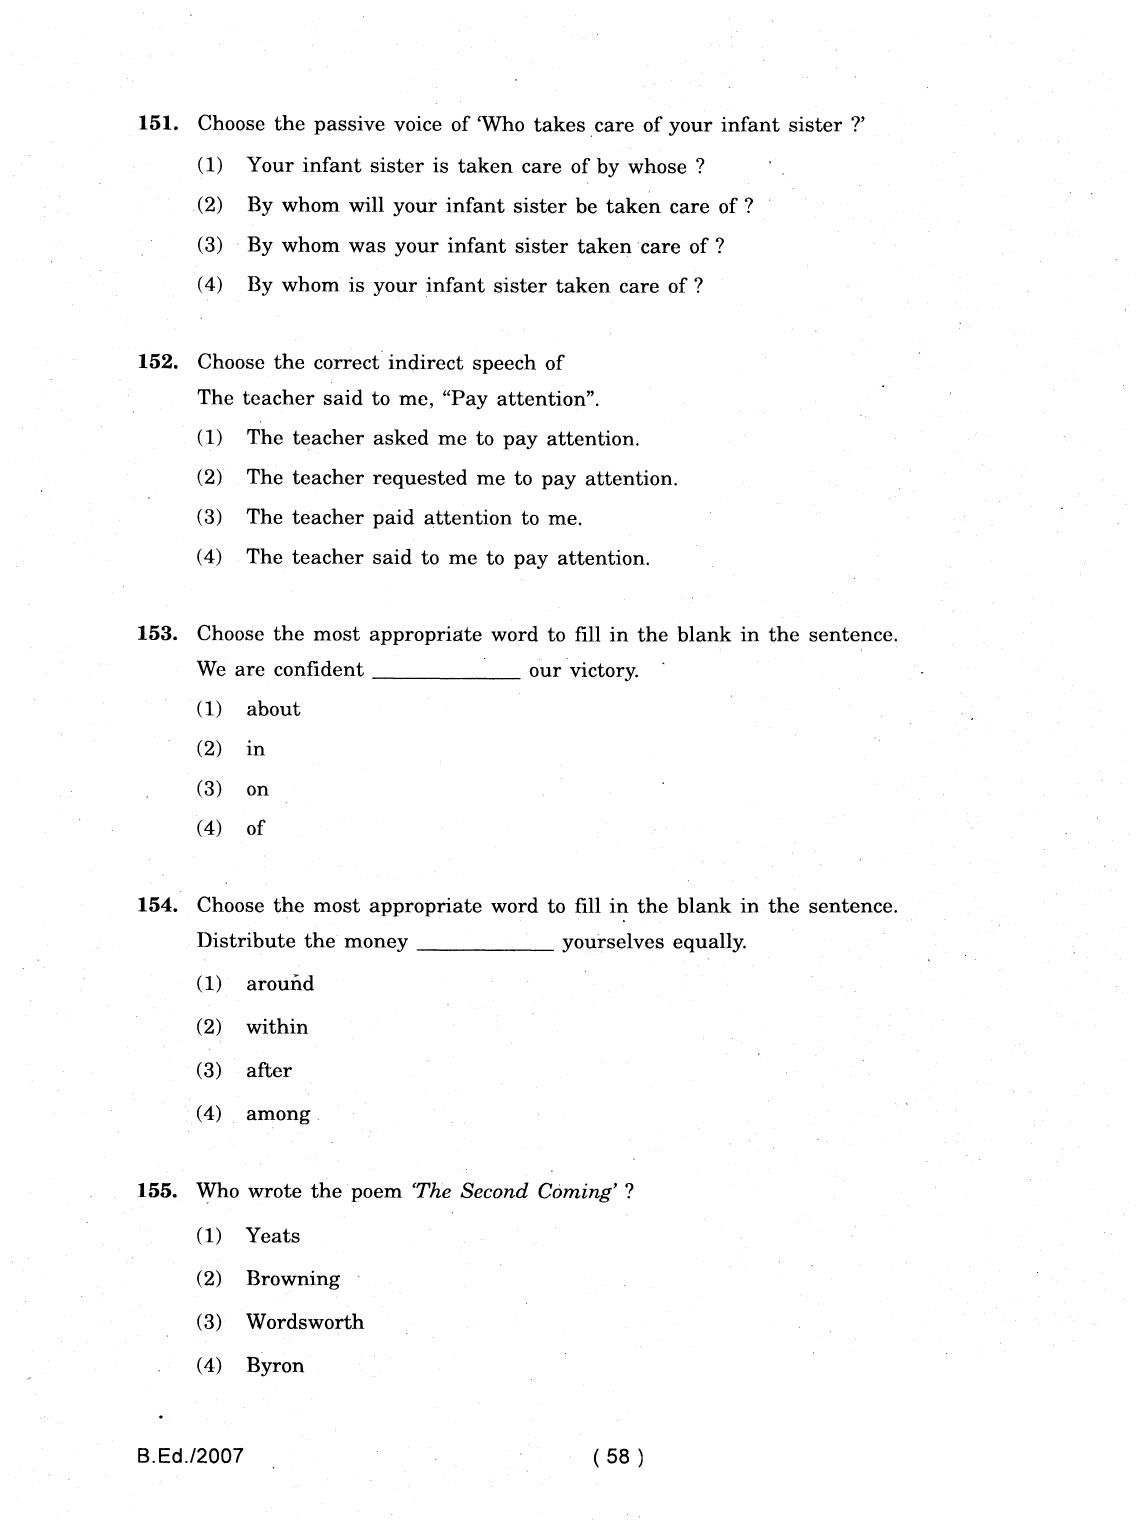 IGNOU B.Ed 2007 Question Paper - Page 58